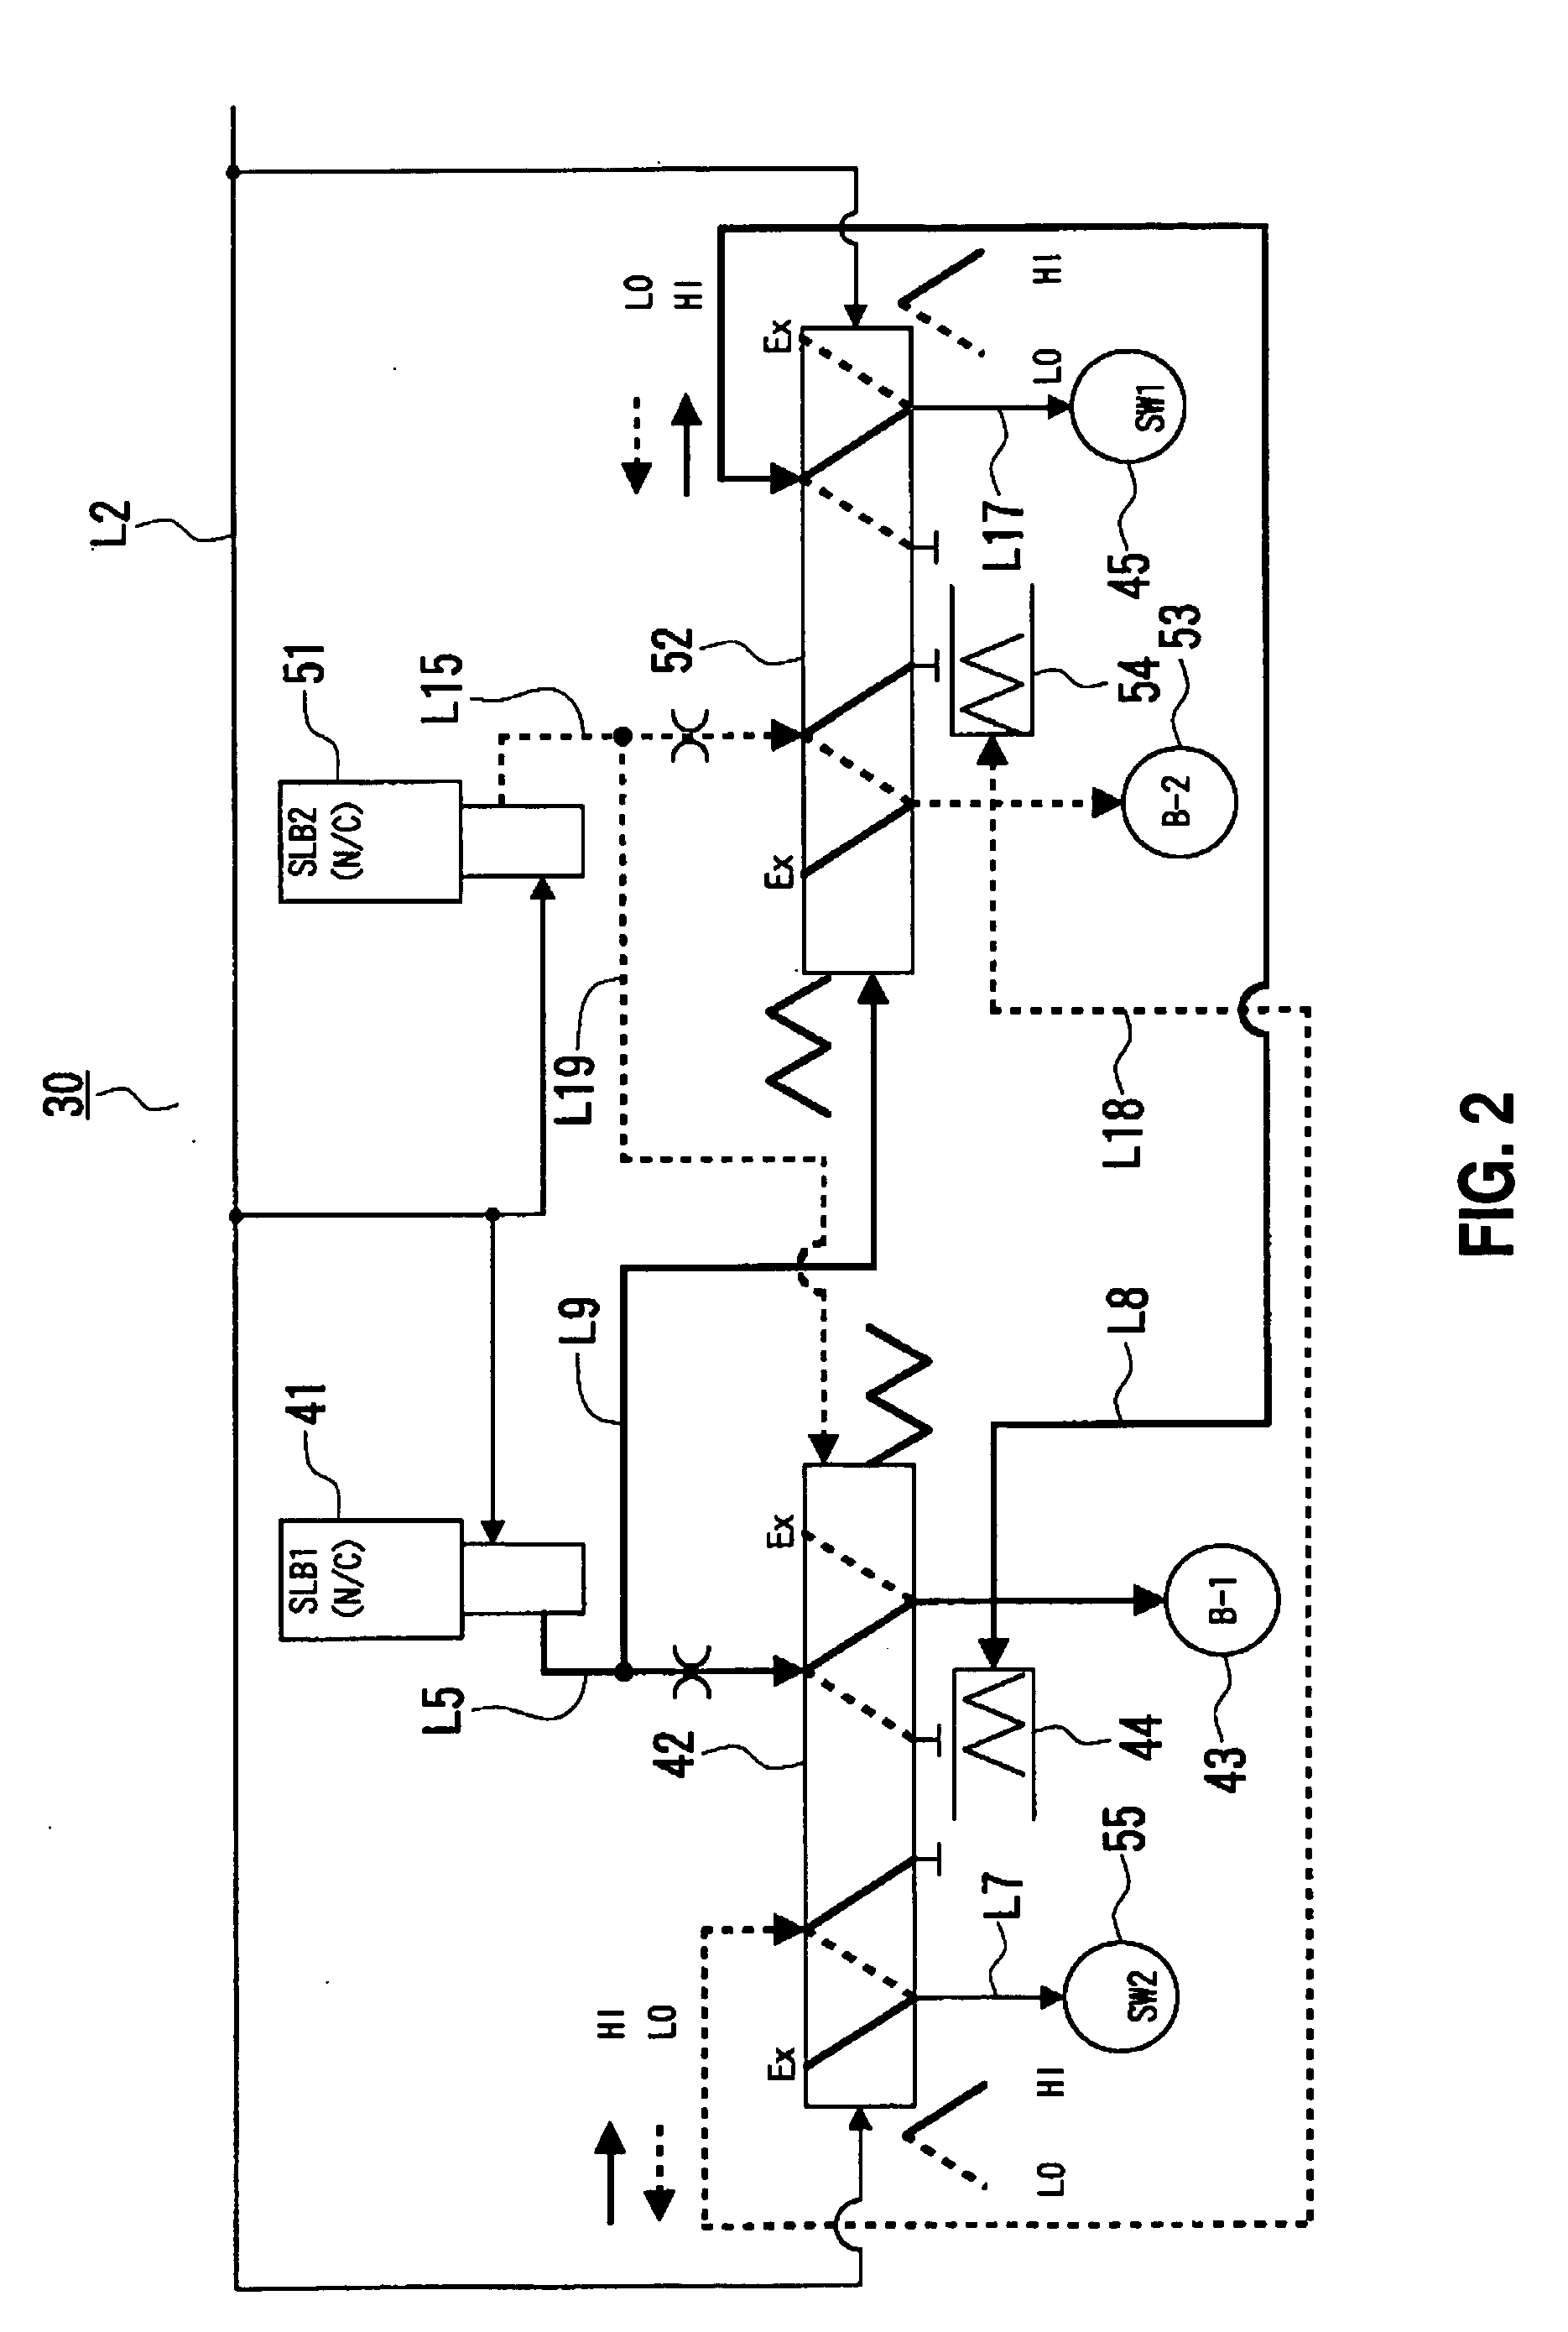 Failsafe hydraulic circuit